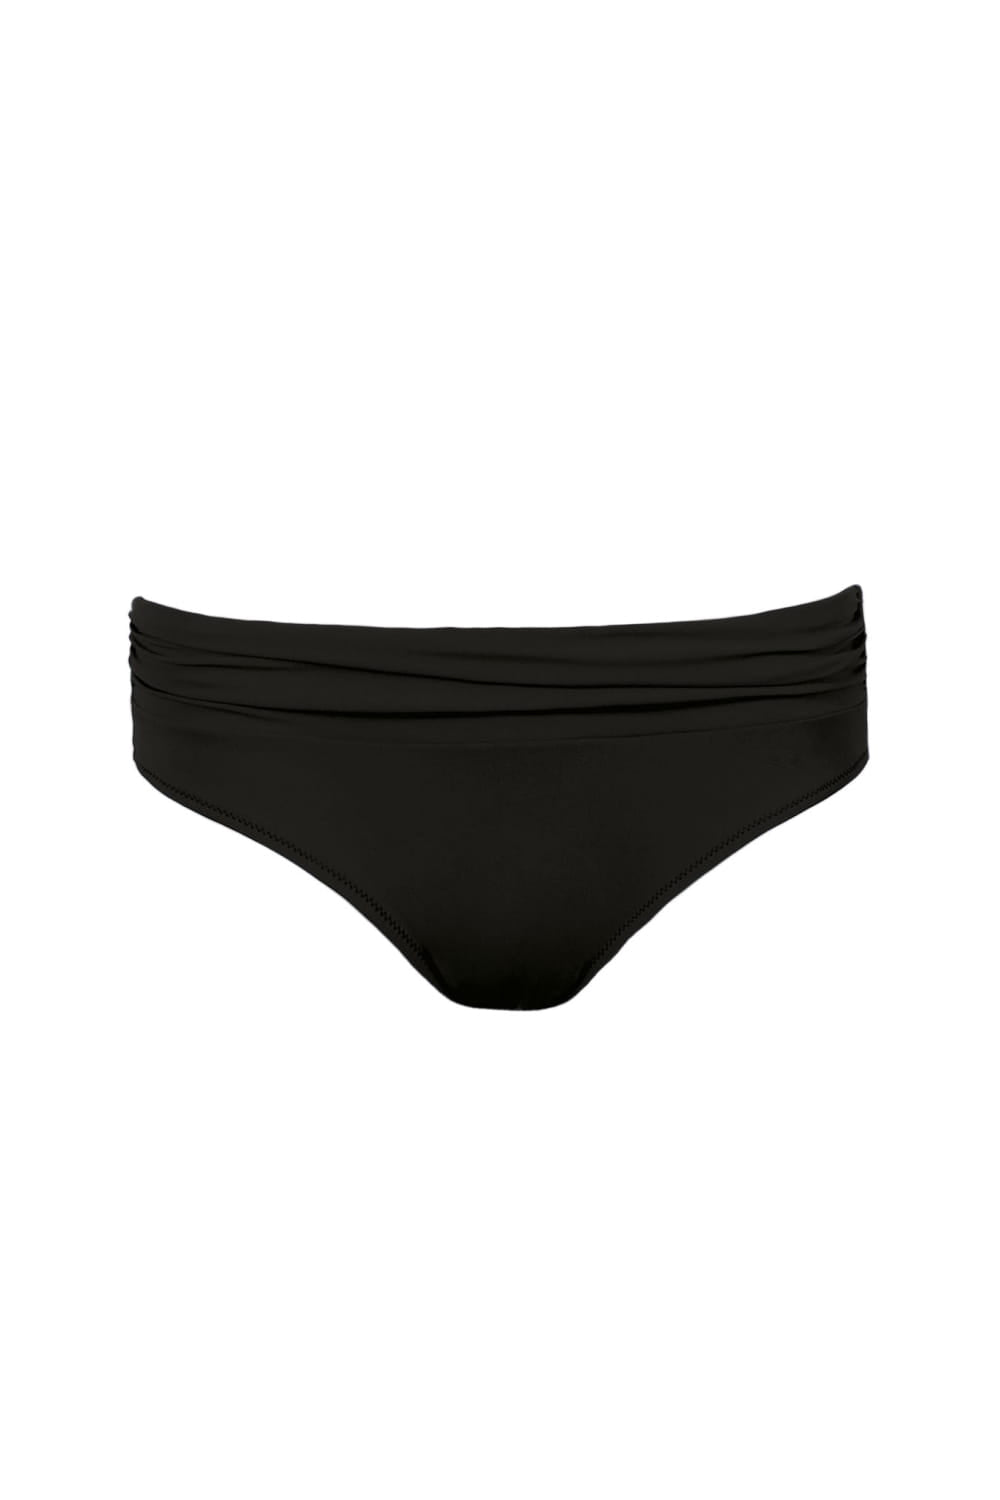 Axami Luxury Swimwear F110 High Waisted Bikini Bottom Black